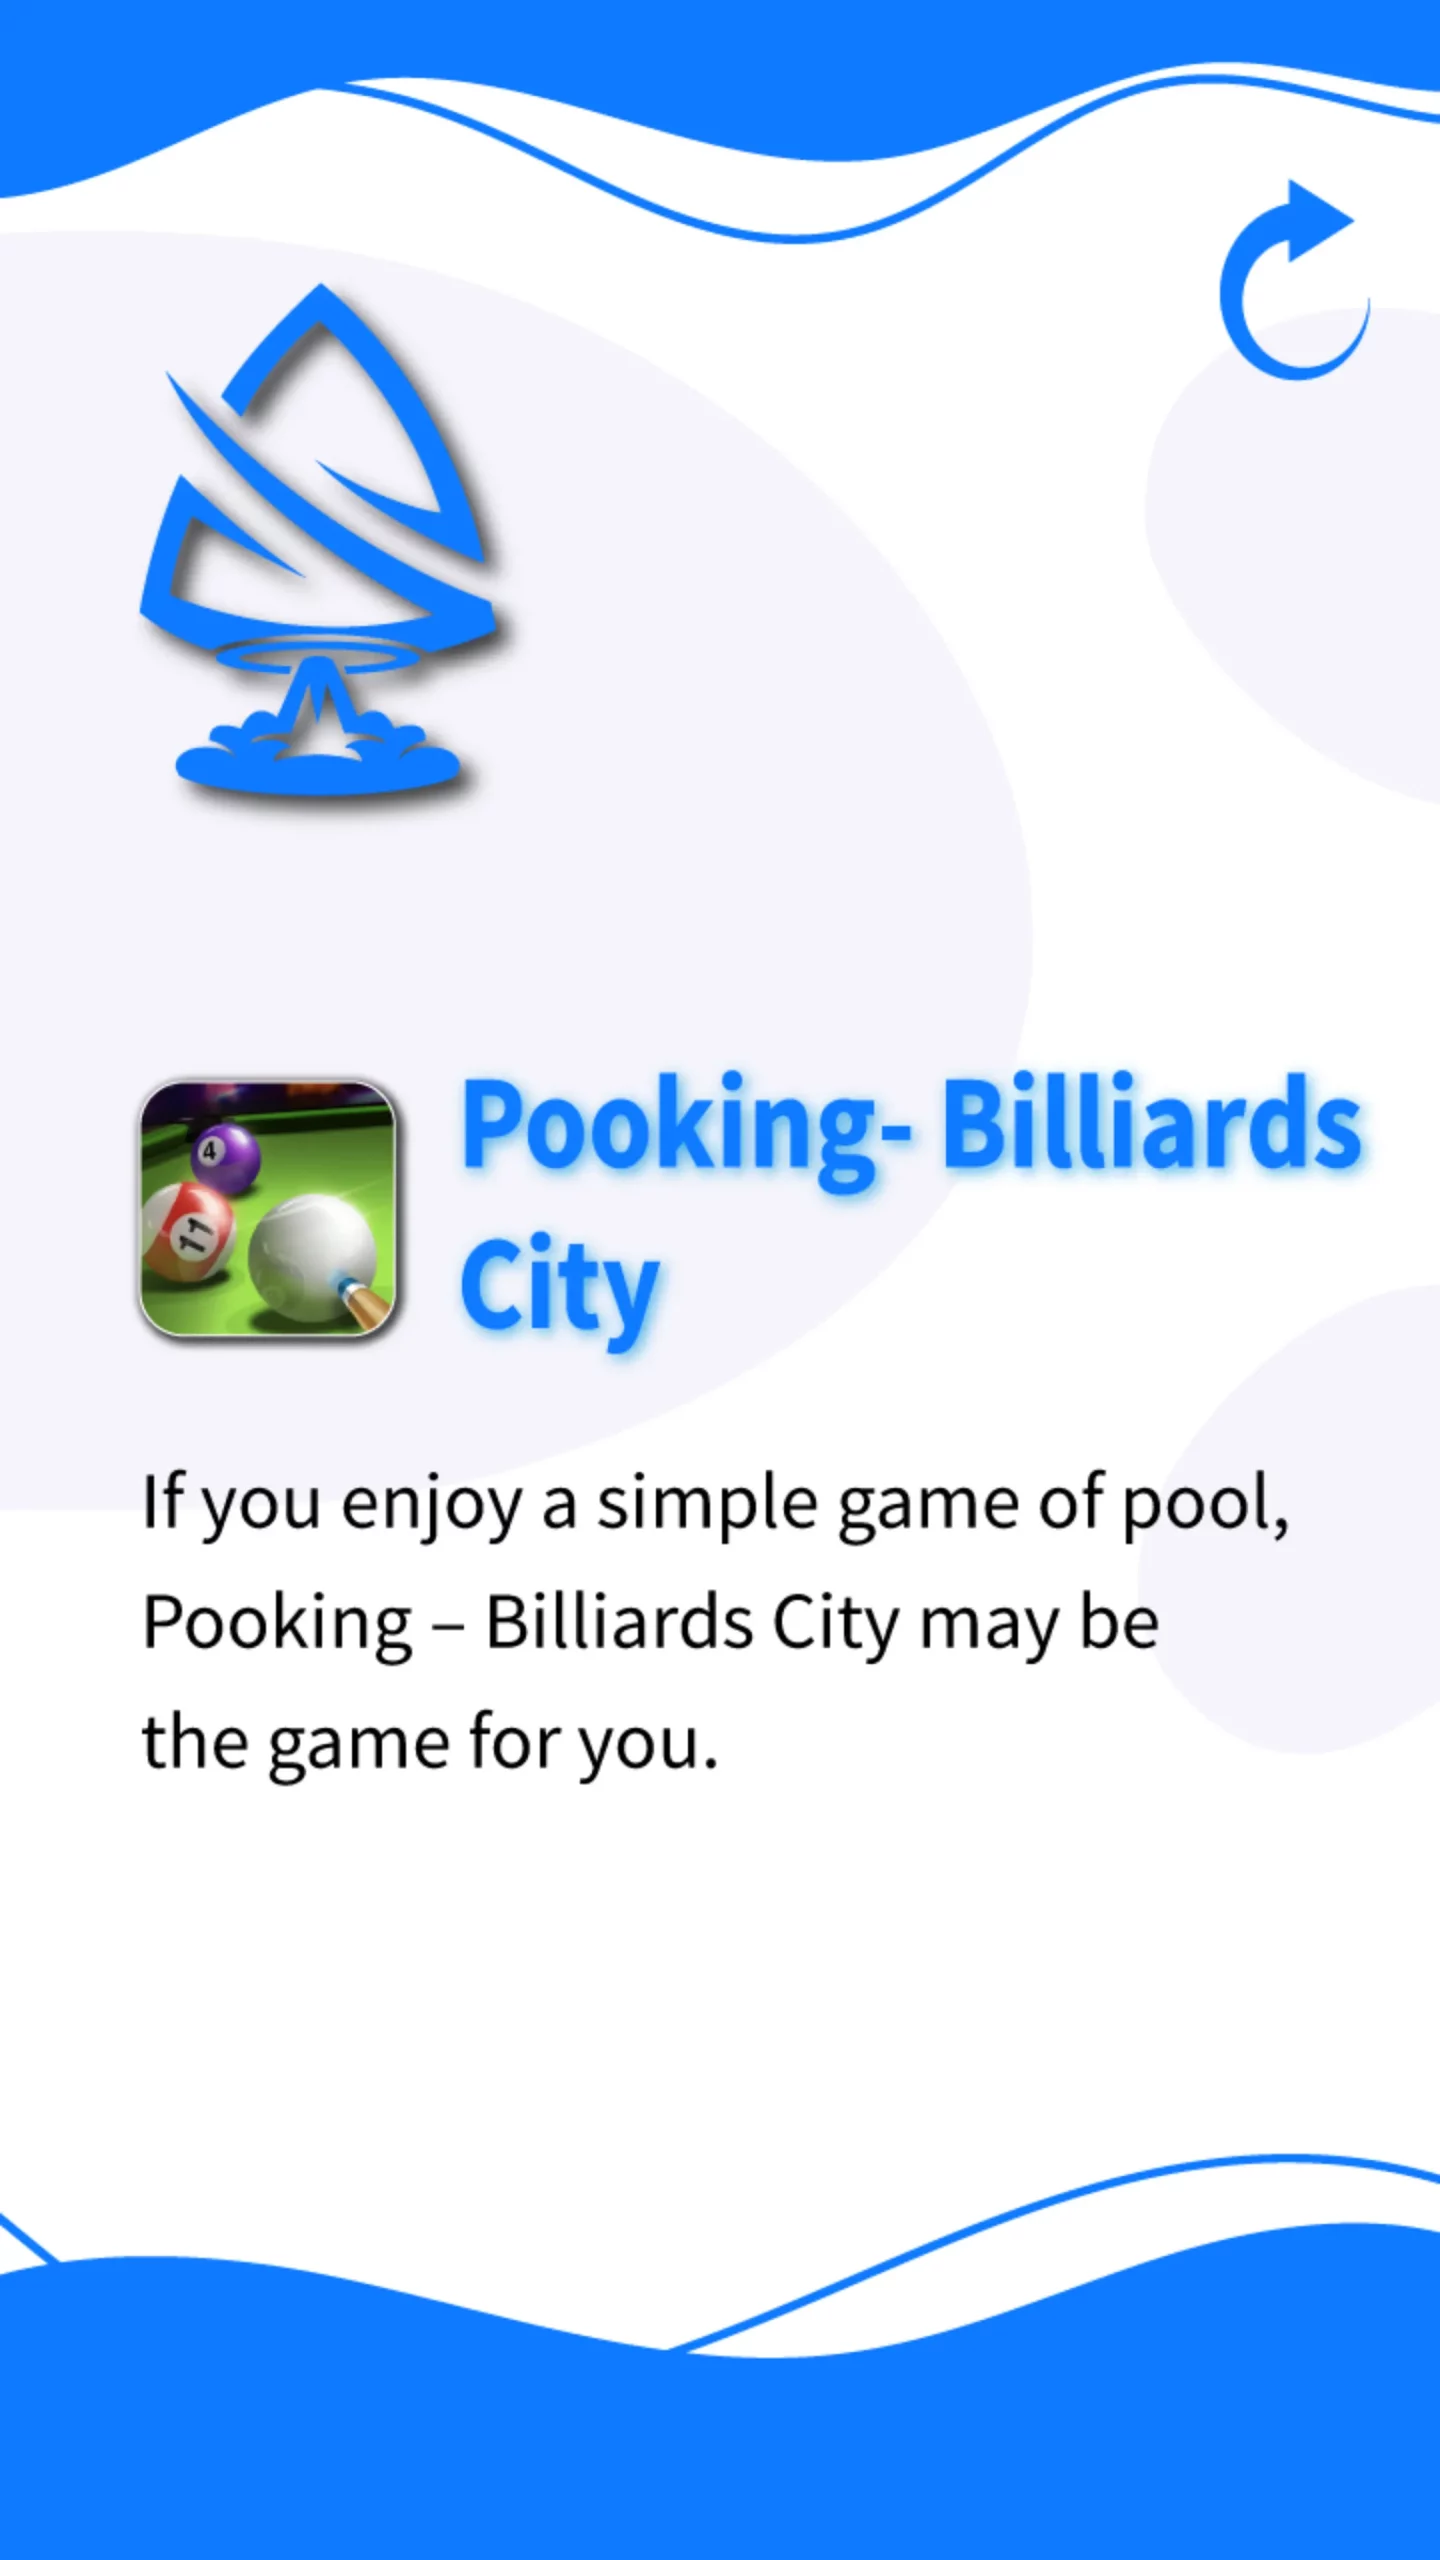 POOKING - BILLIARDS CITY jogo online gratuito em